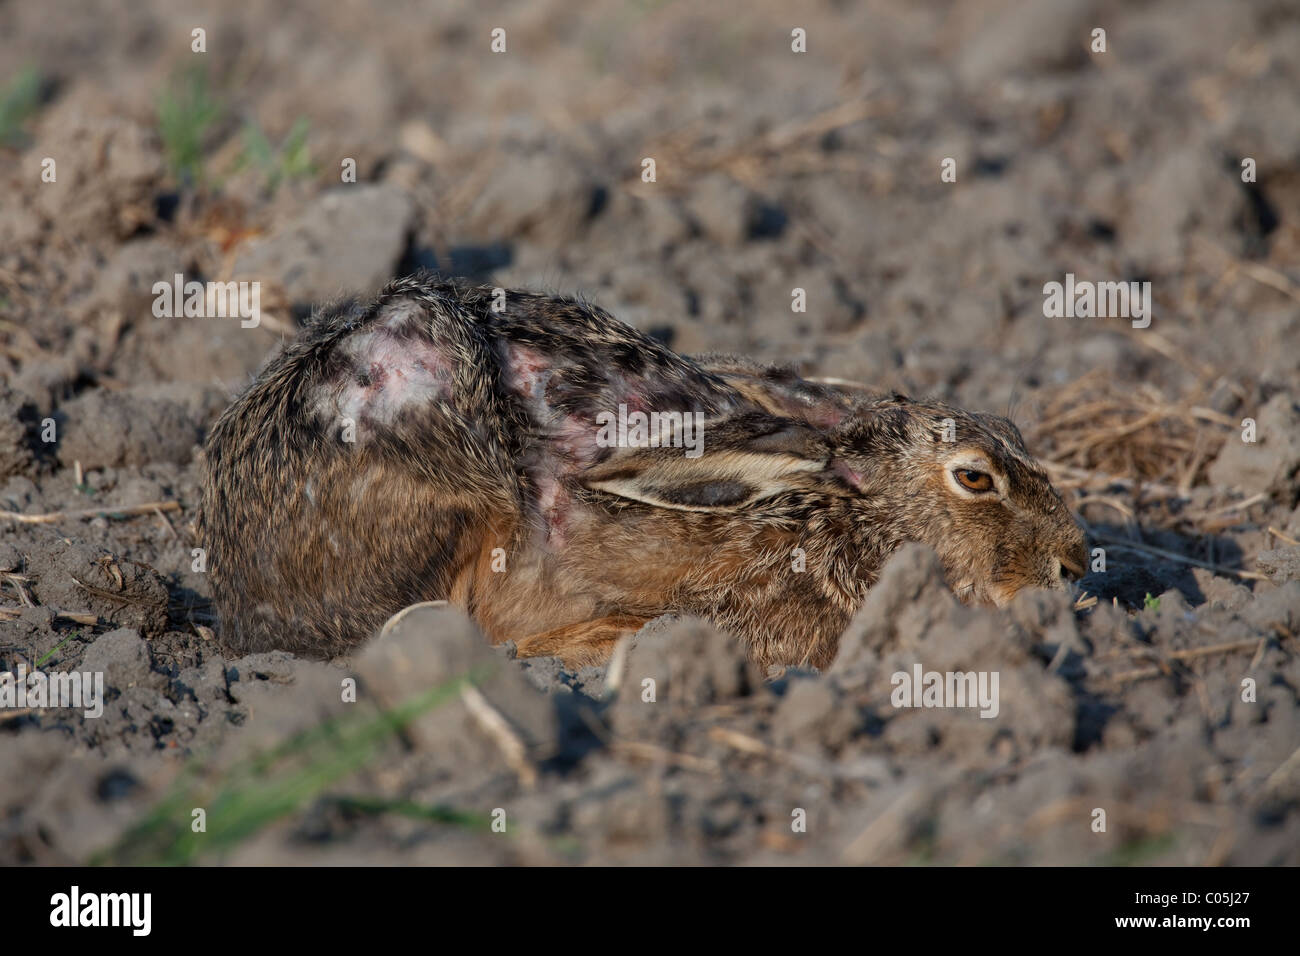 European hare (Lepus europaeus) with skin disease hiding in field, Germany Stock Photo